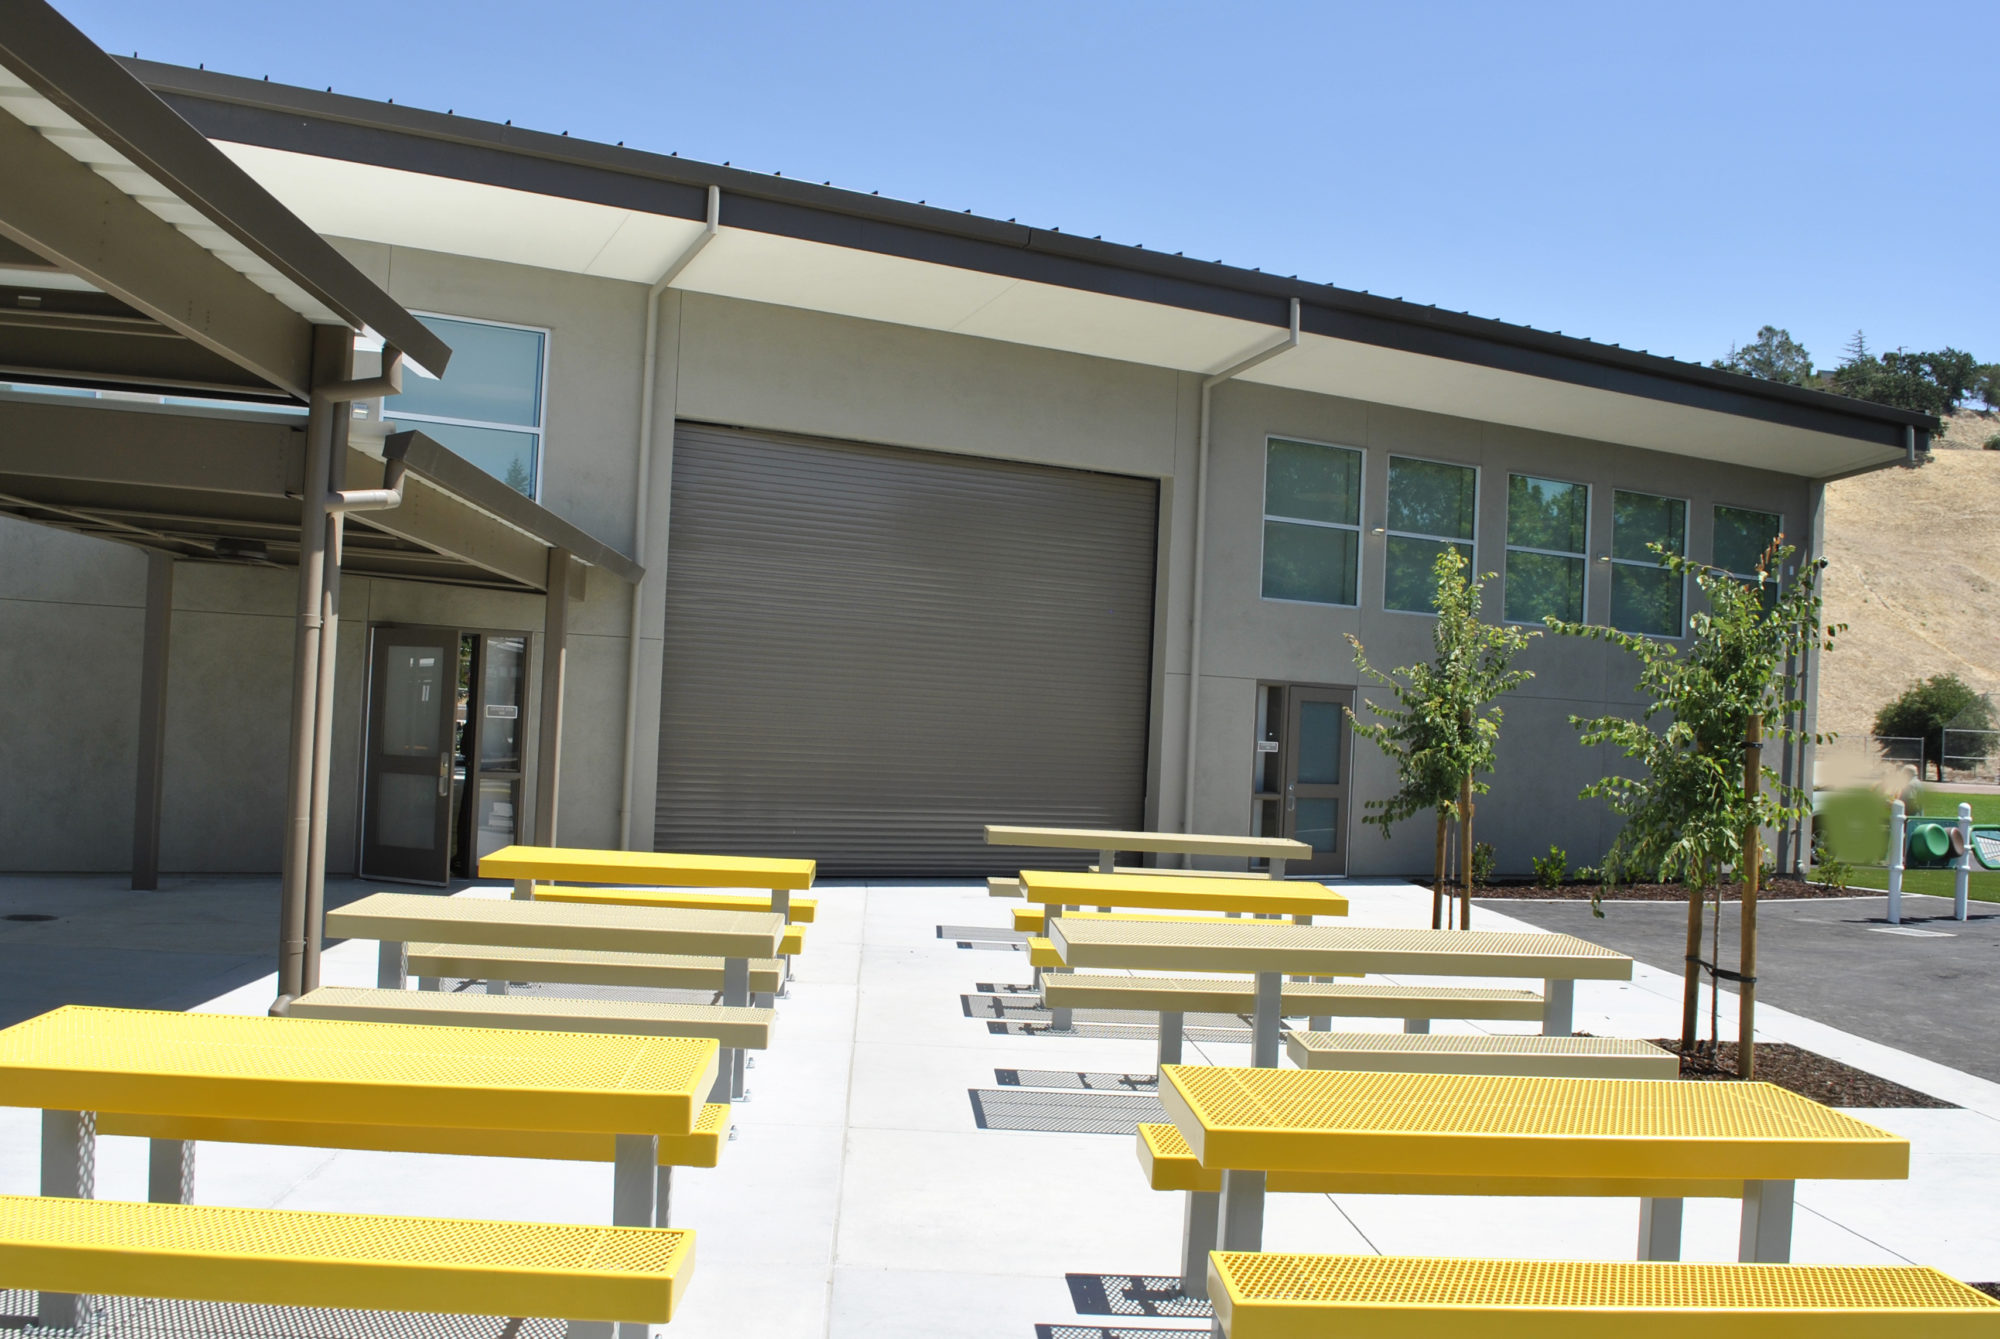 Tice Creek K-8 School Mulitpurpose Building Exterior Seating